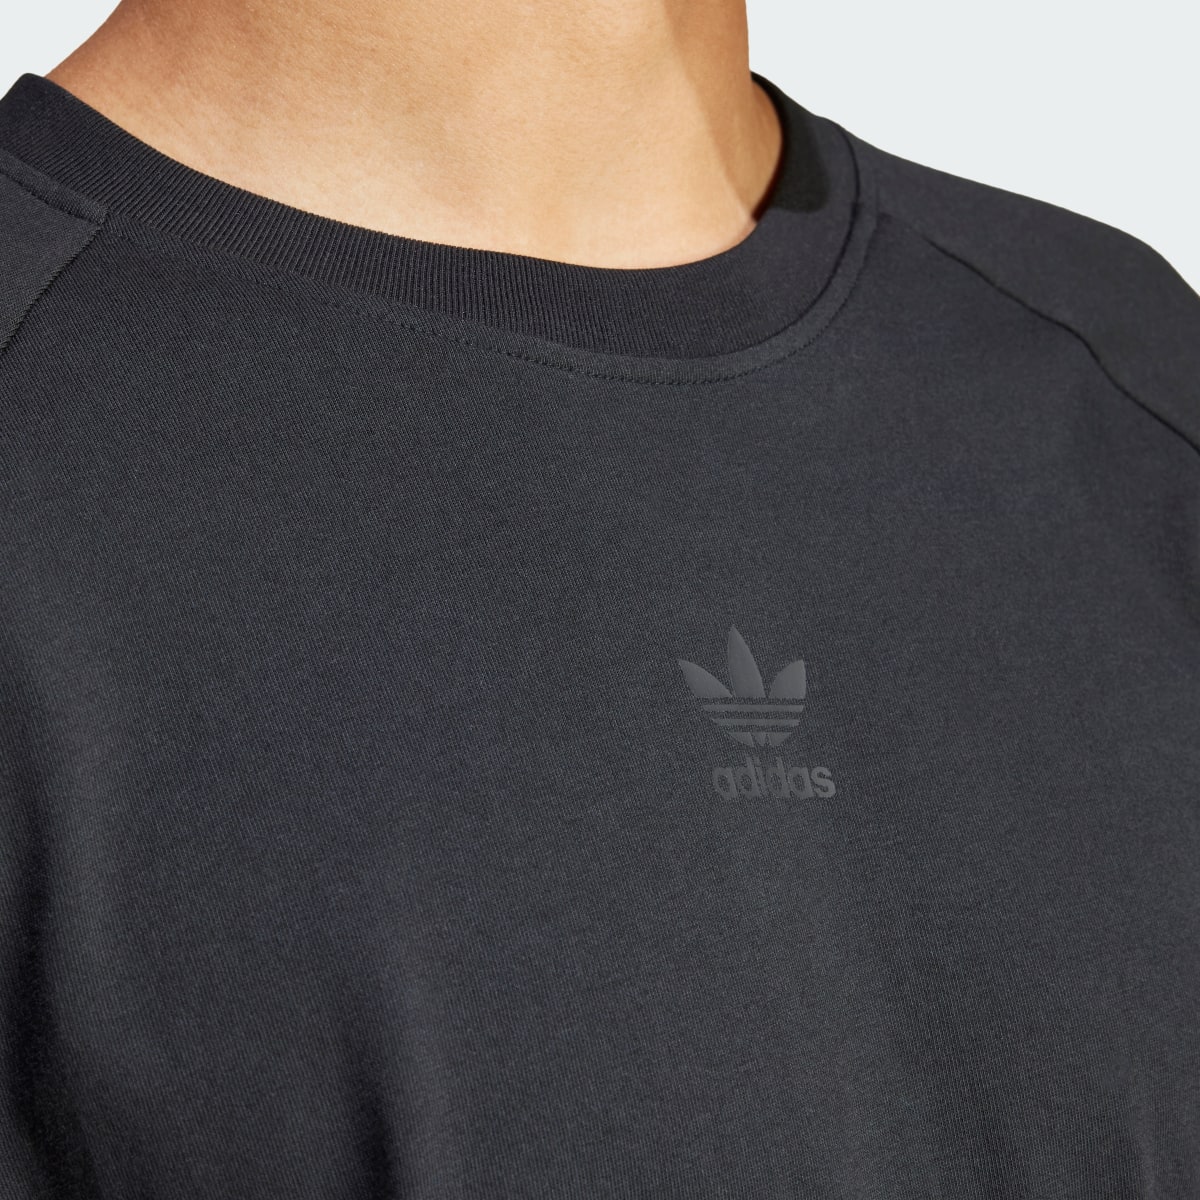 Adidas Graphic Long Sleeve T-Shirt. 6